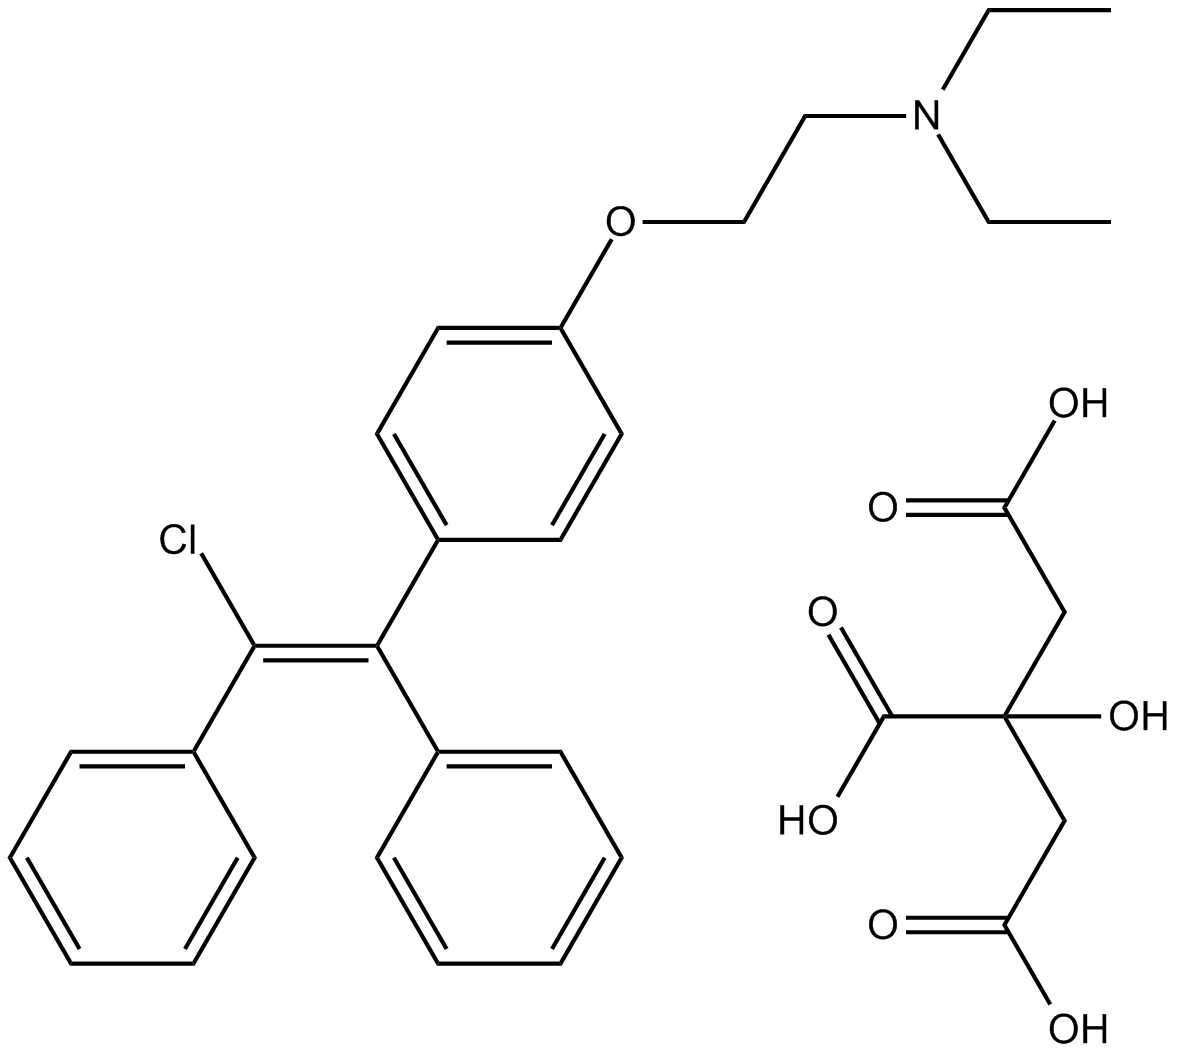 Clomiphene citrate